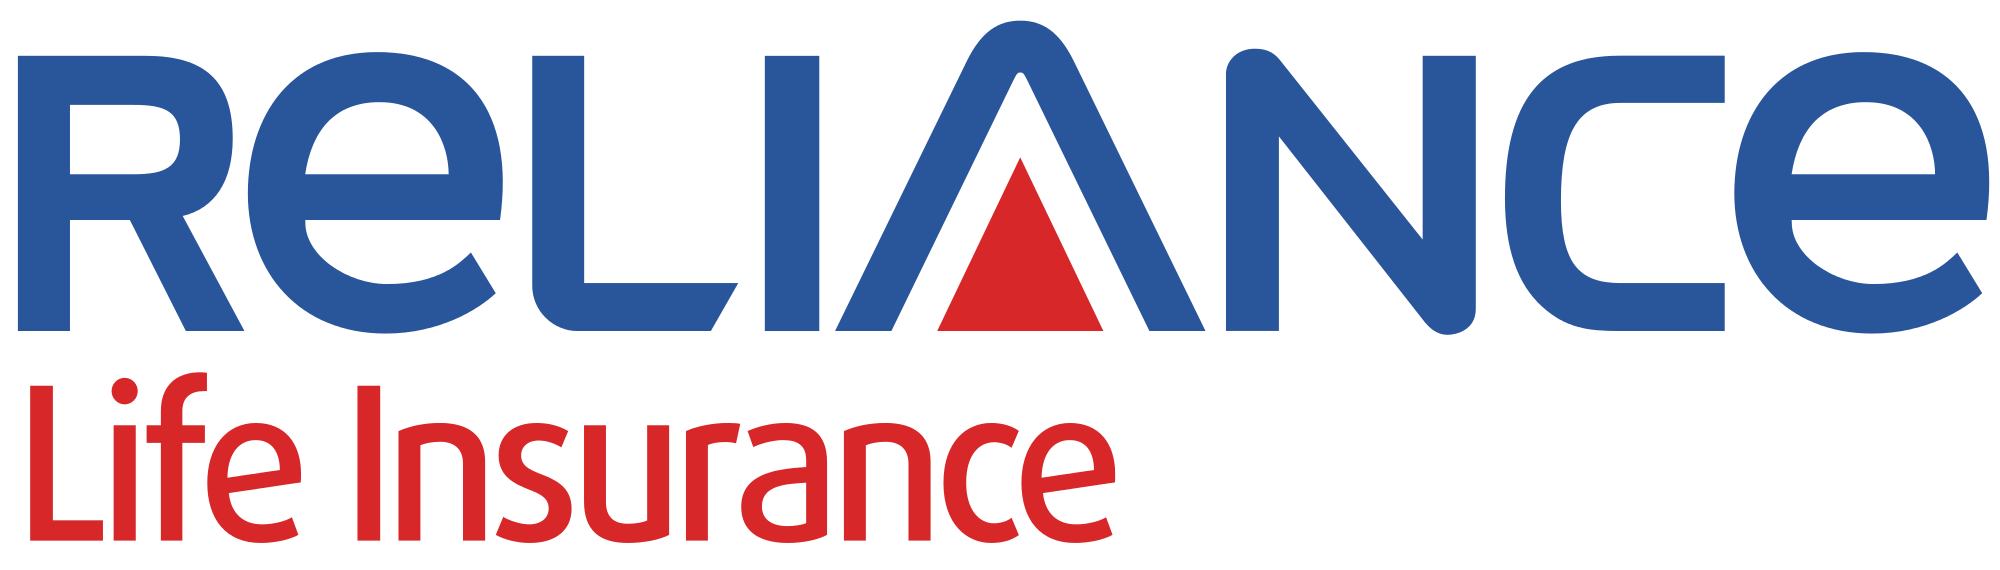 Reliance Life Insurance Co Ltd